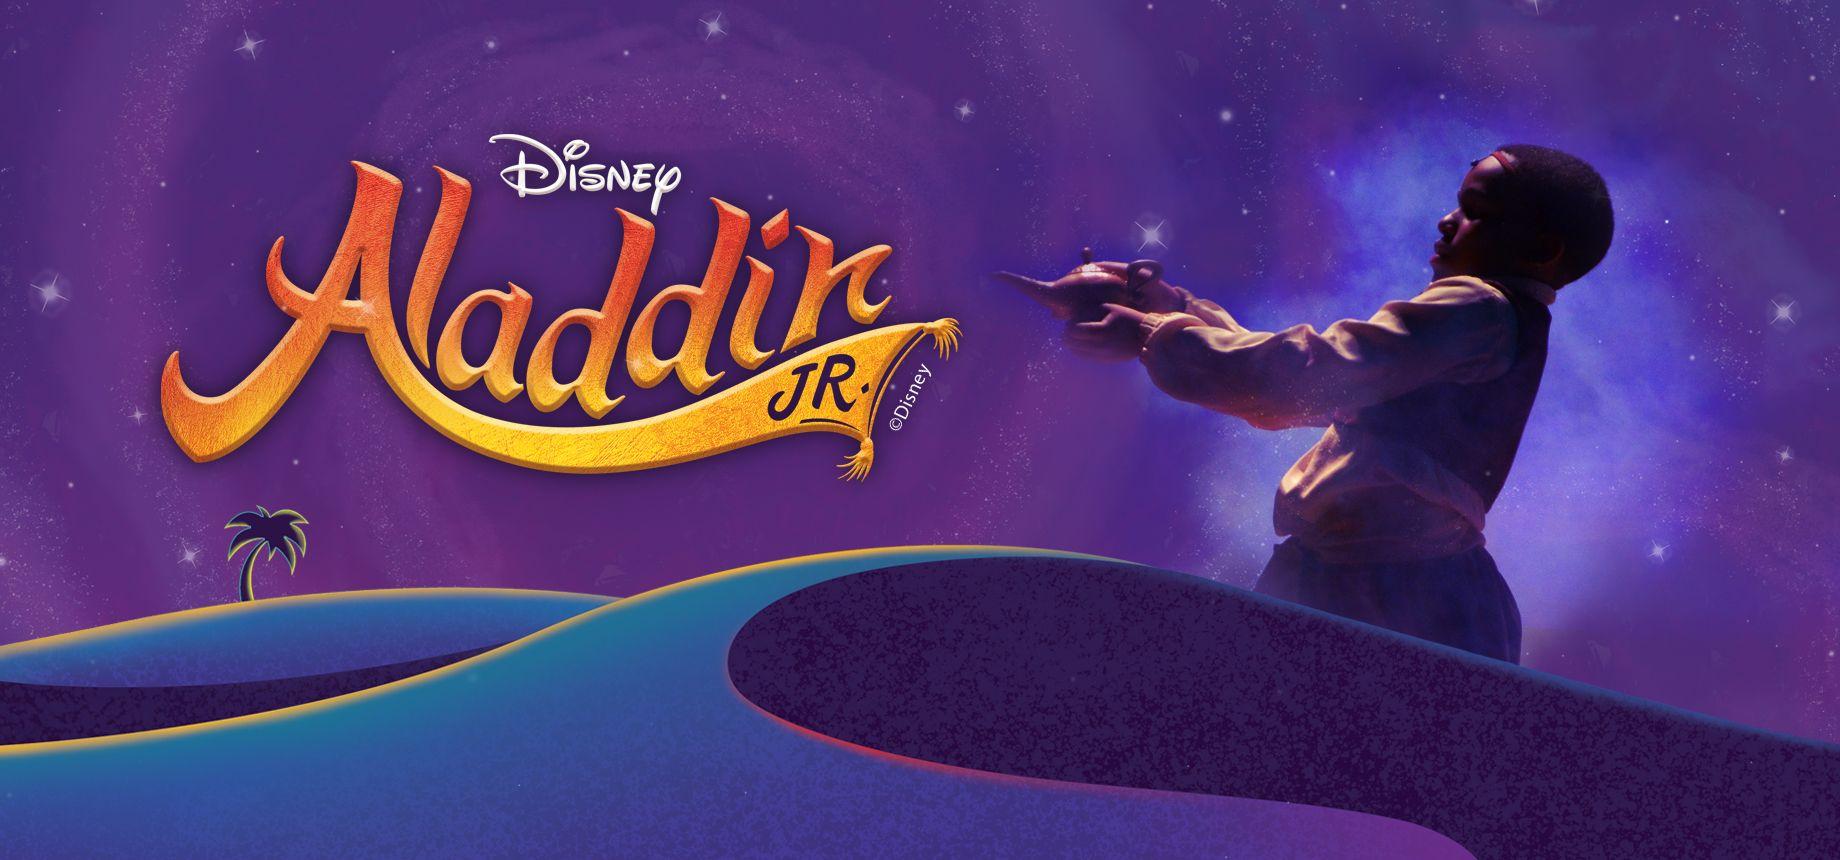 Aladdin Walt Disney Presents Logo - Disney's Aladdin JR. Music Theatre International